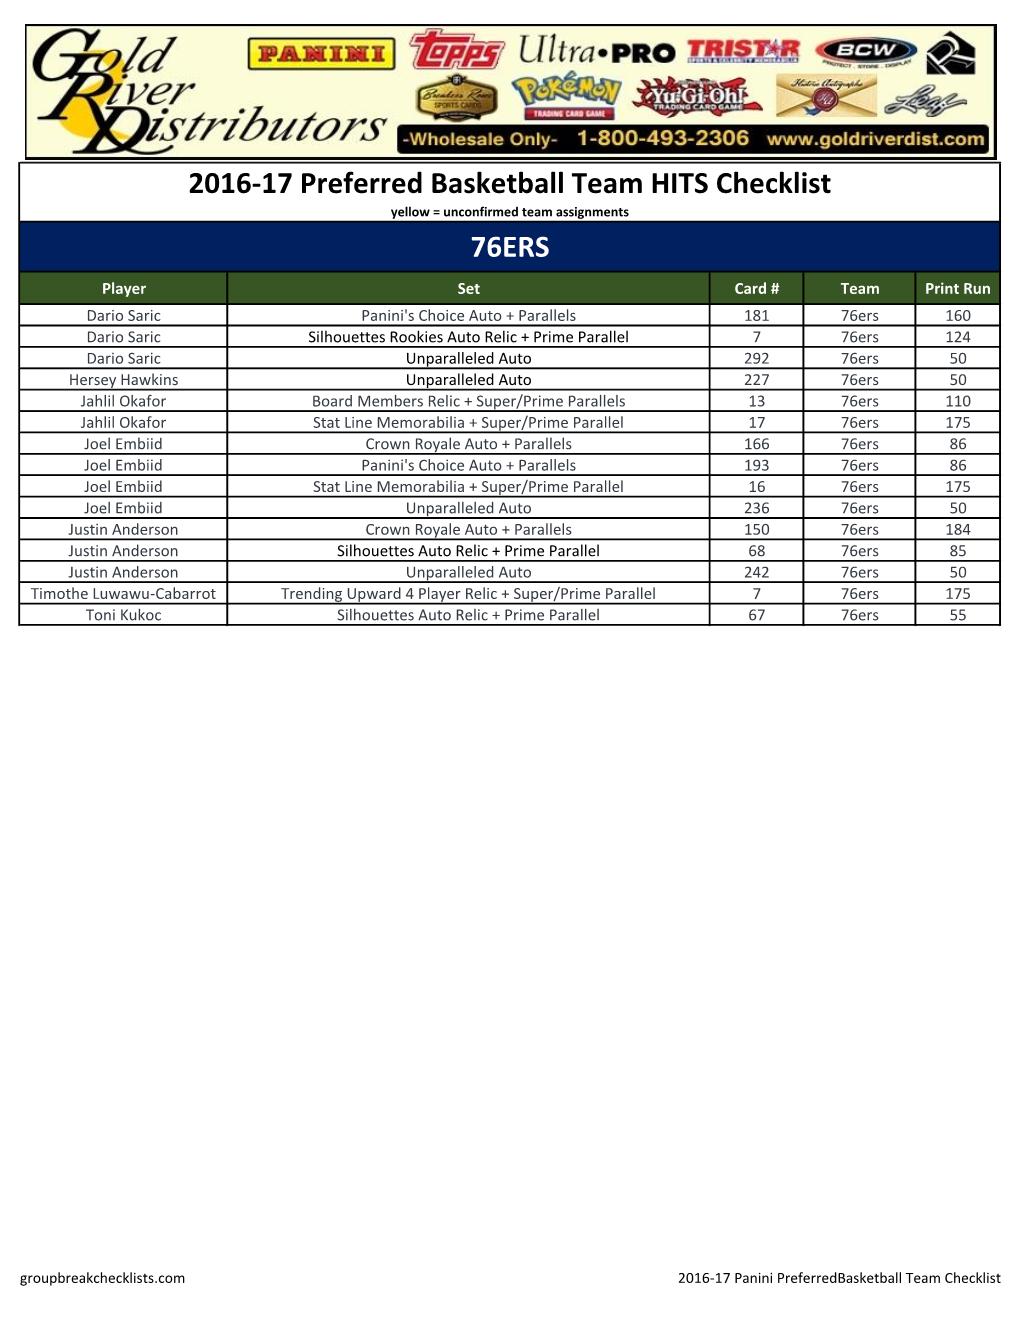 2016-17-Preferred-Basketball Checklist